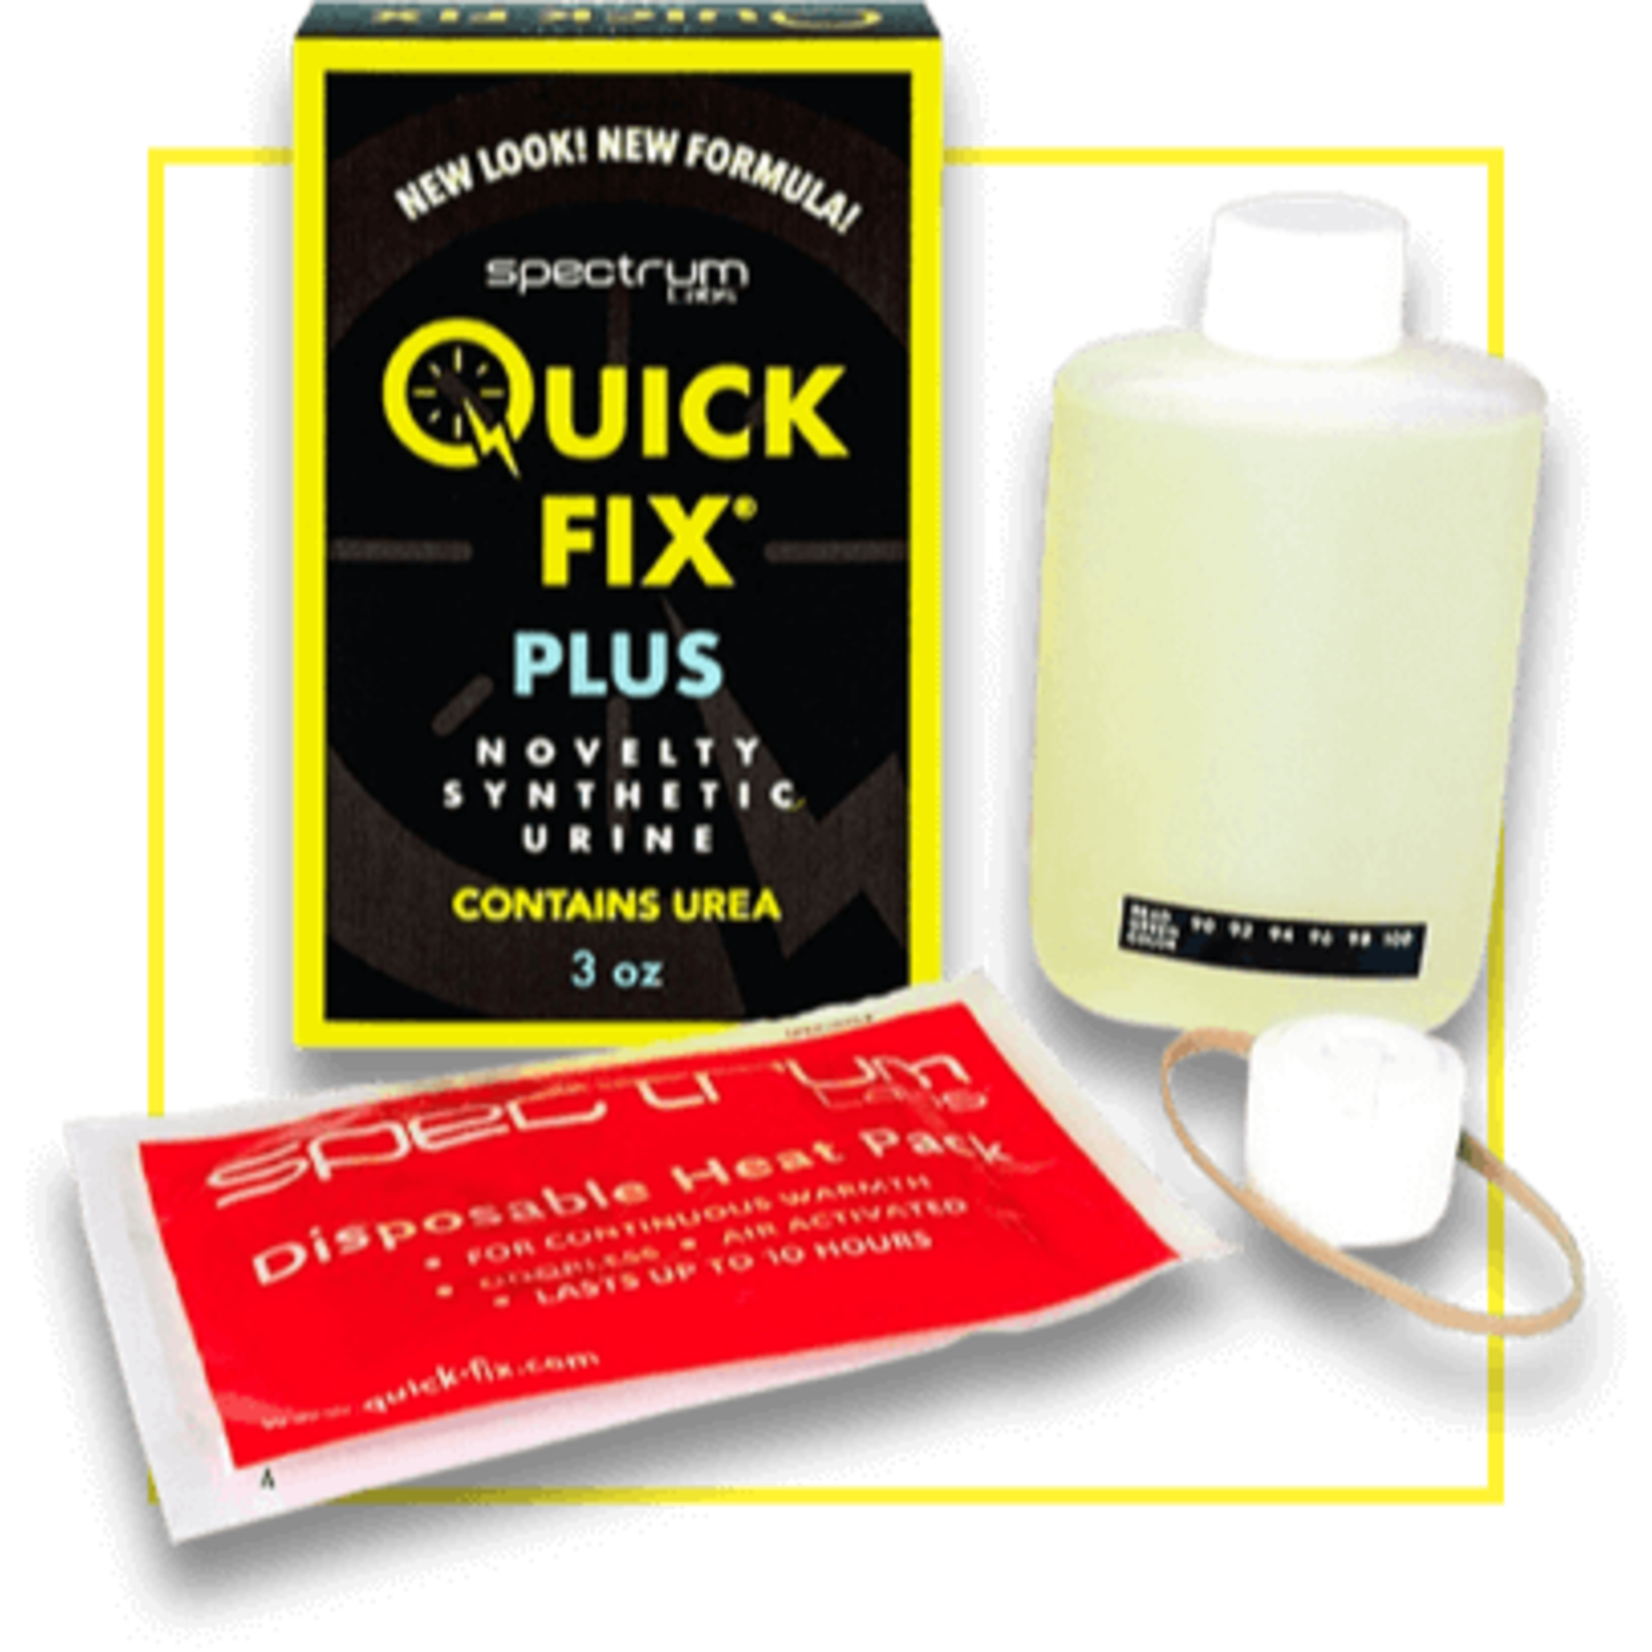 Quick fix synthetic urine